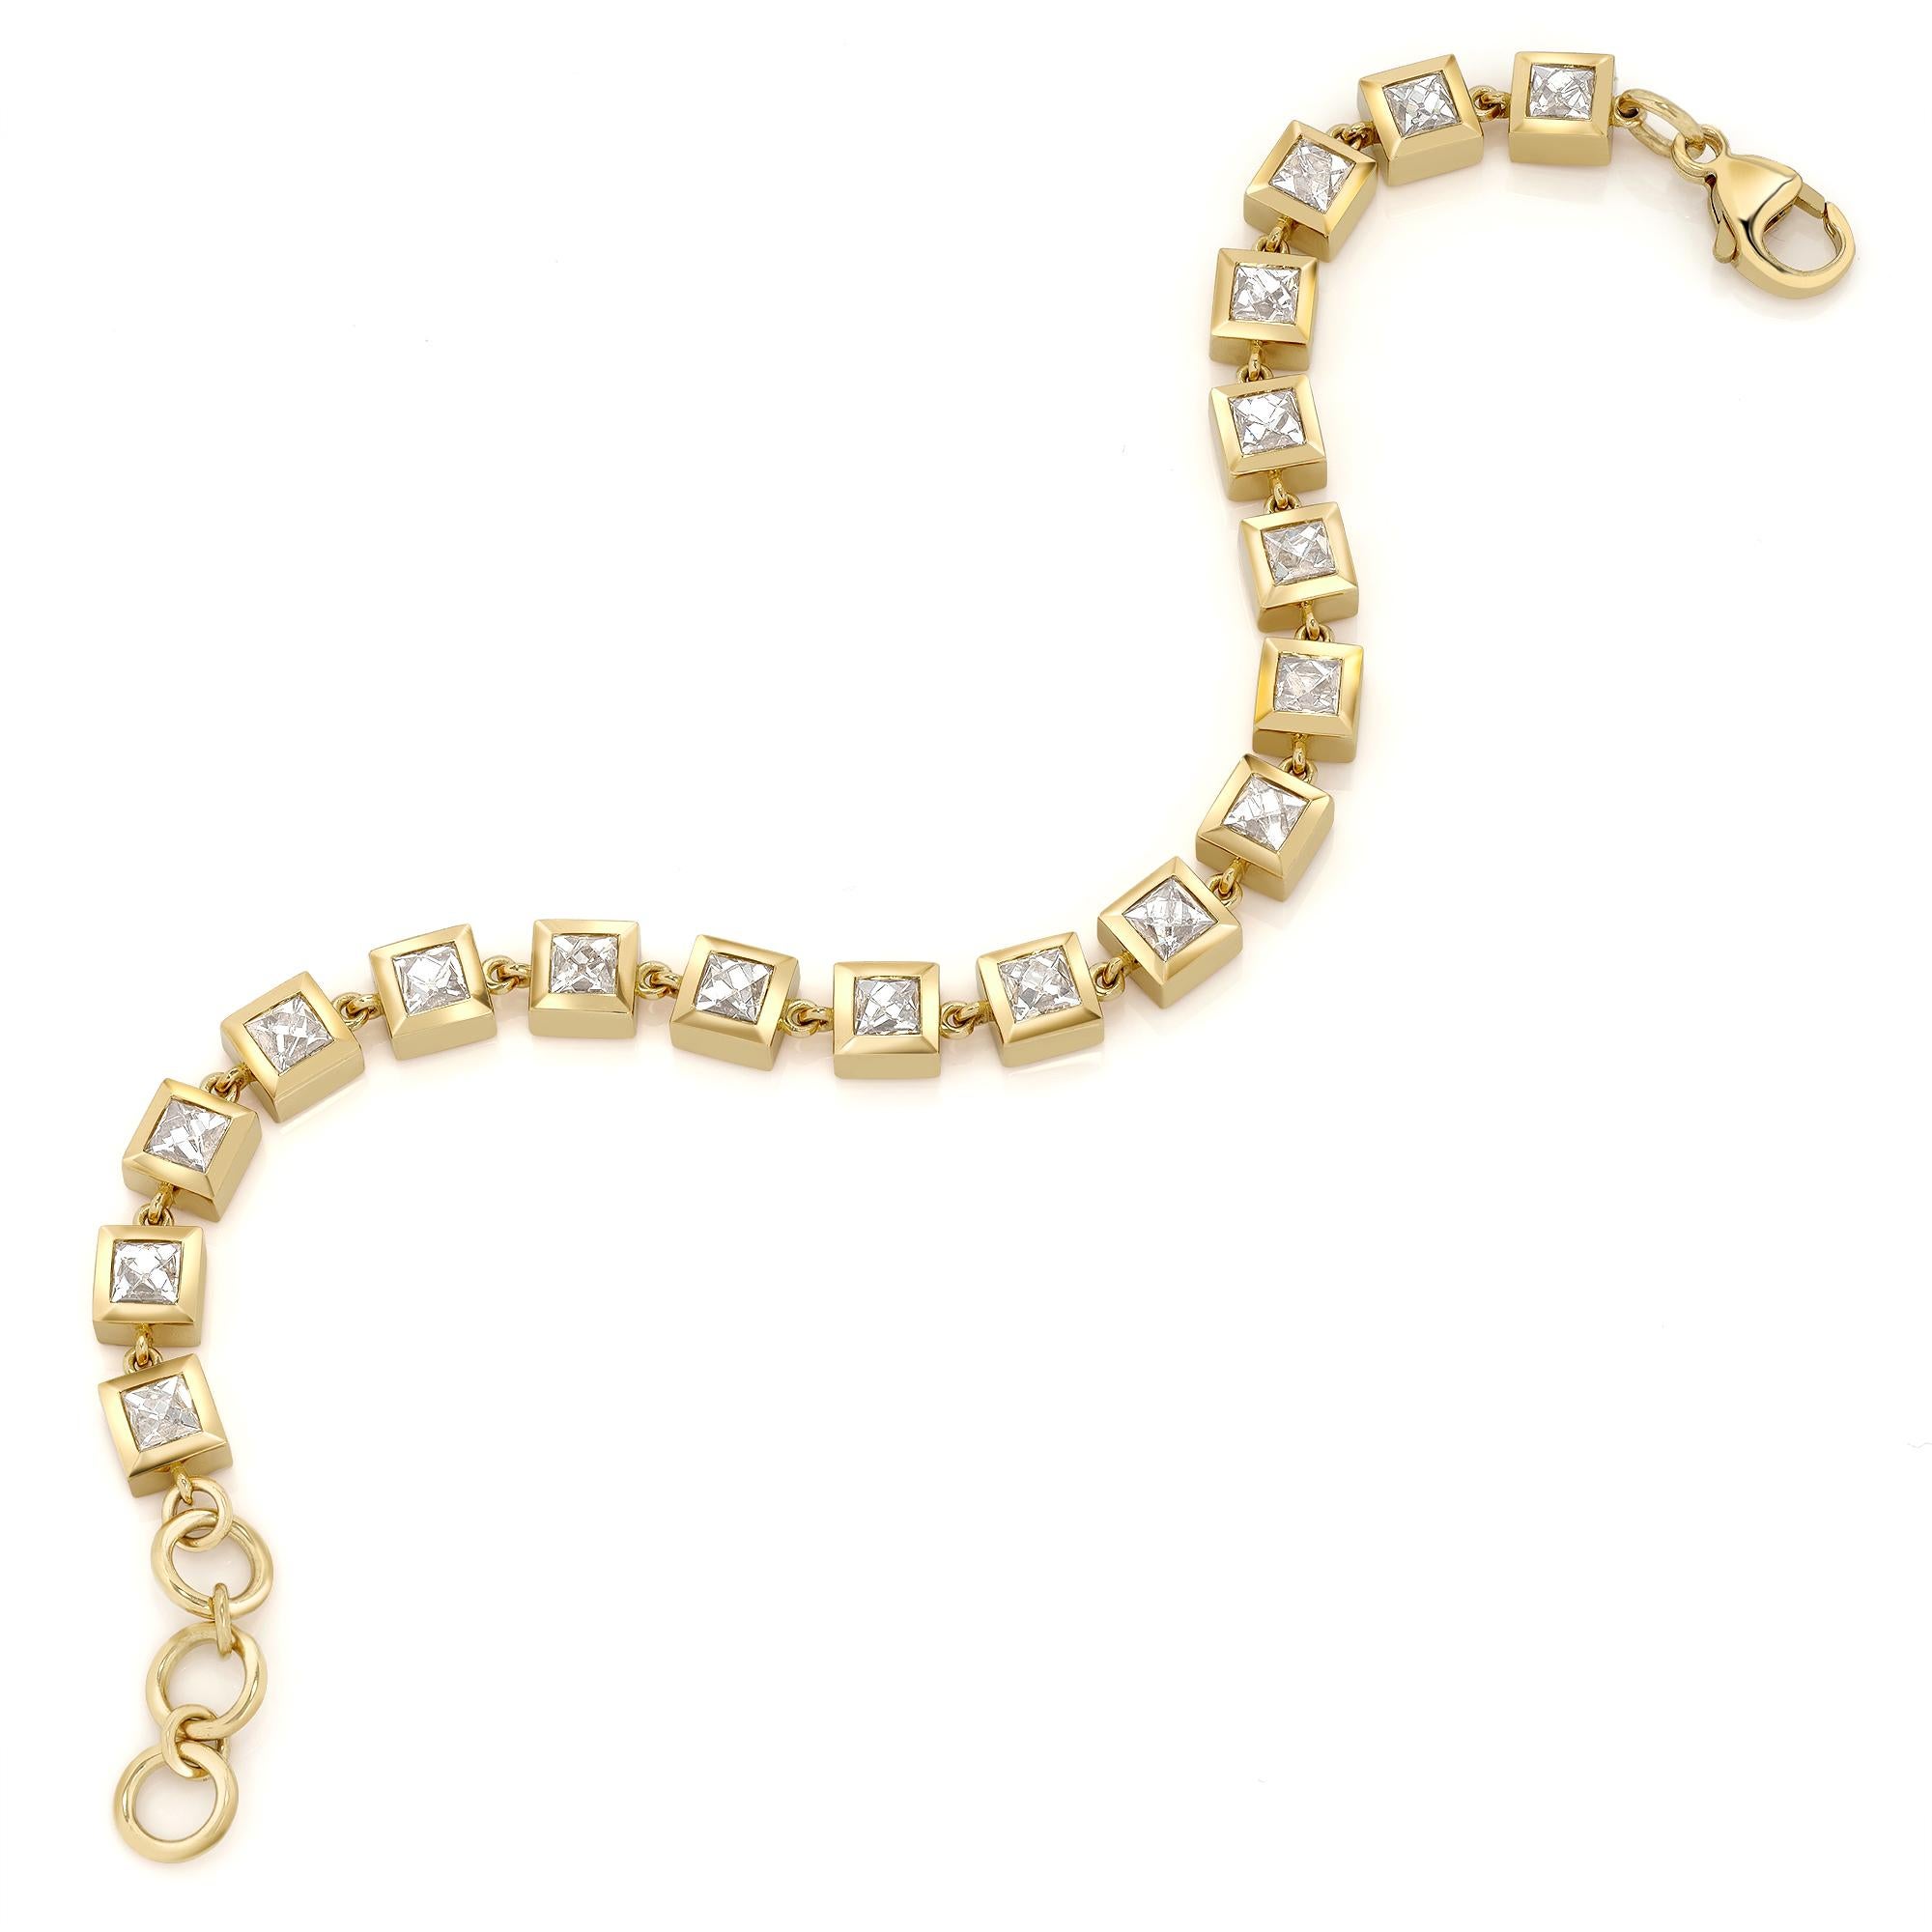 8.65ctw H-I/SI-VS French cut diamonds bezel set in a handcrafted 18K yellow gold bracelet.

Bracelet measures 7.5